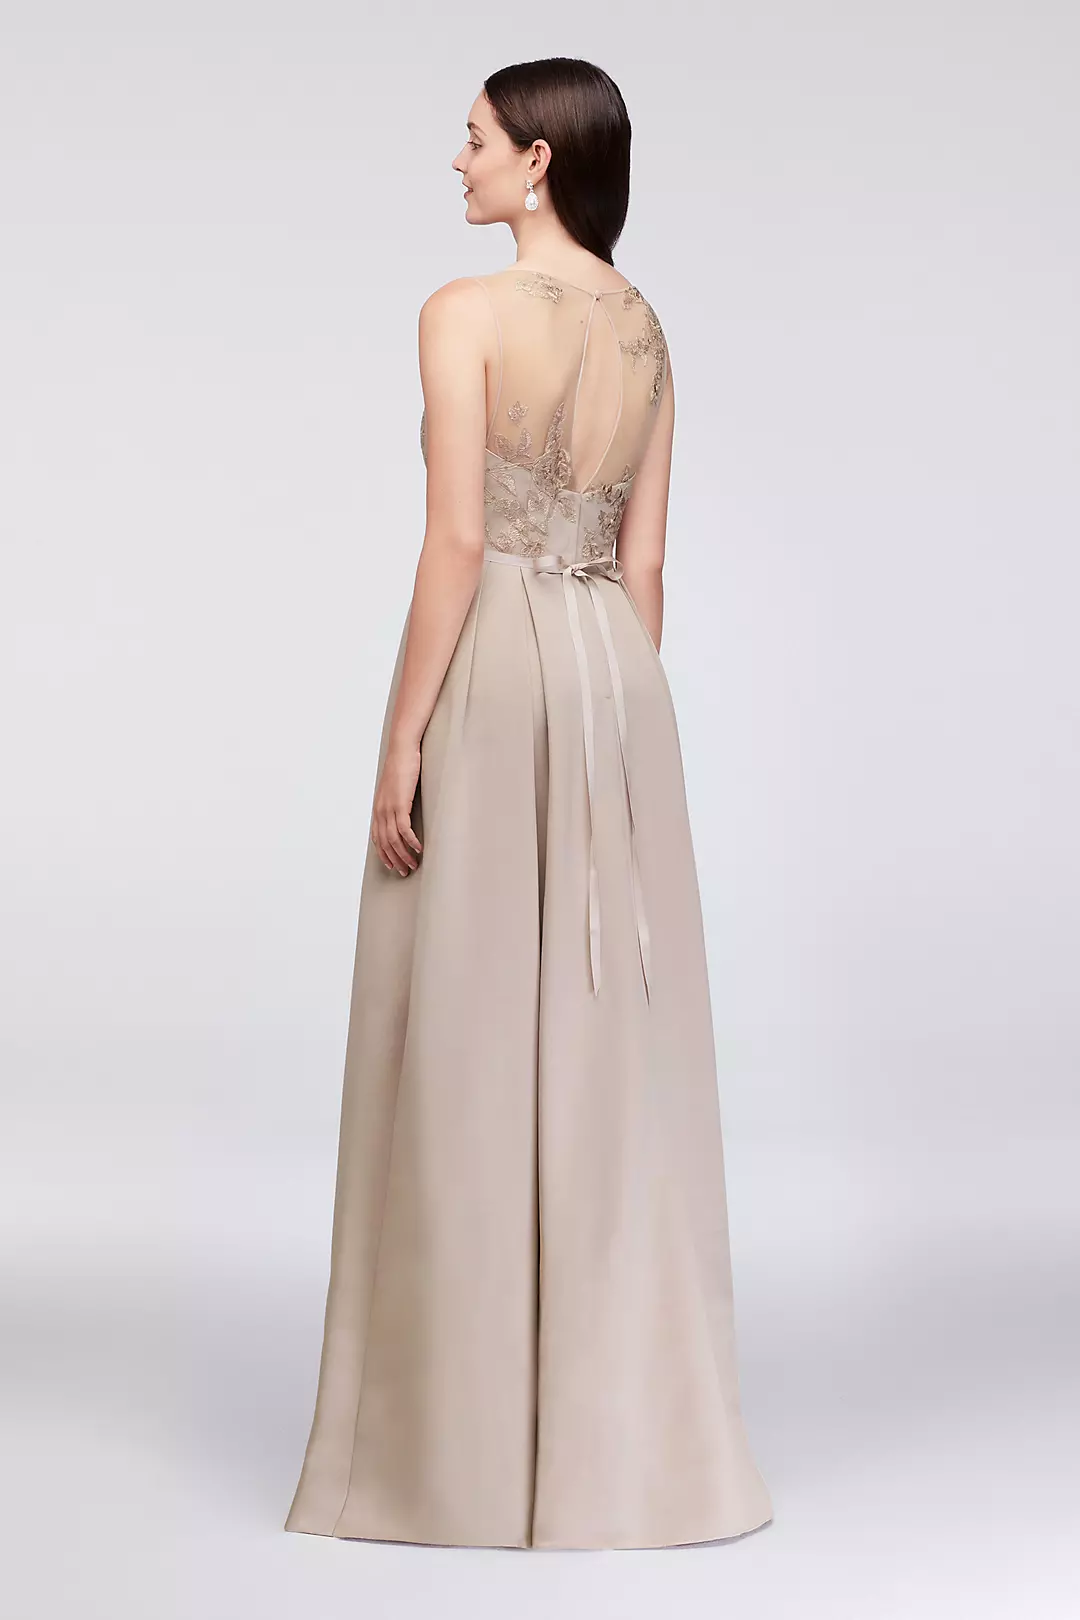 Appliqued Illusion Faille Bridesmaid Dress Image 2